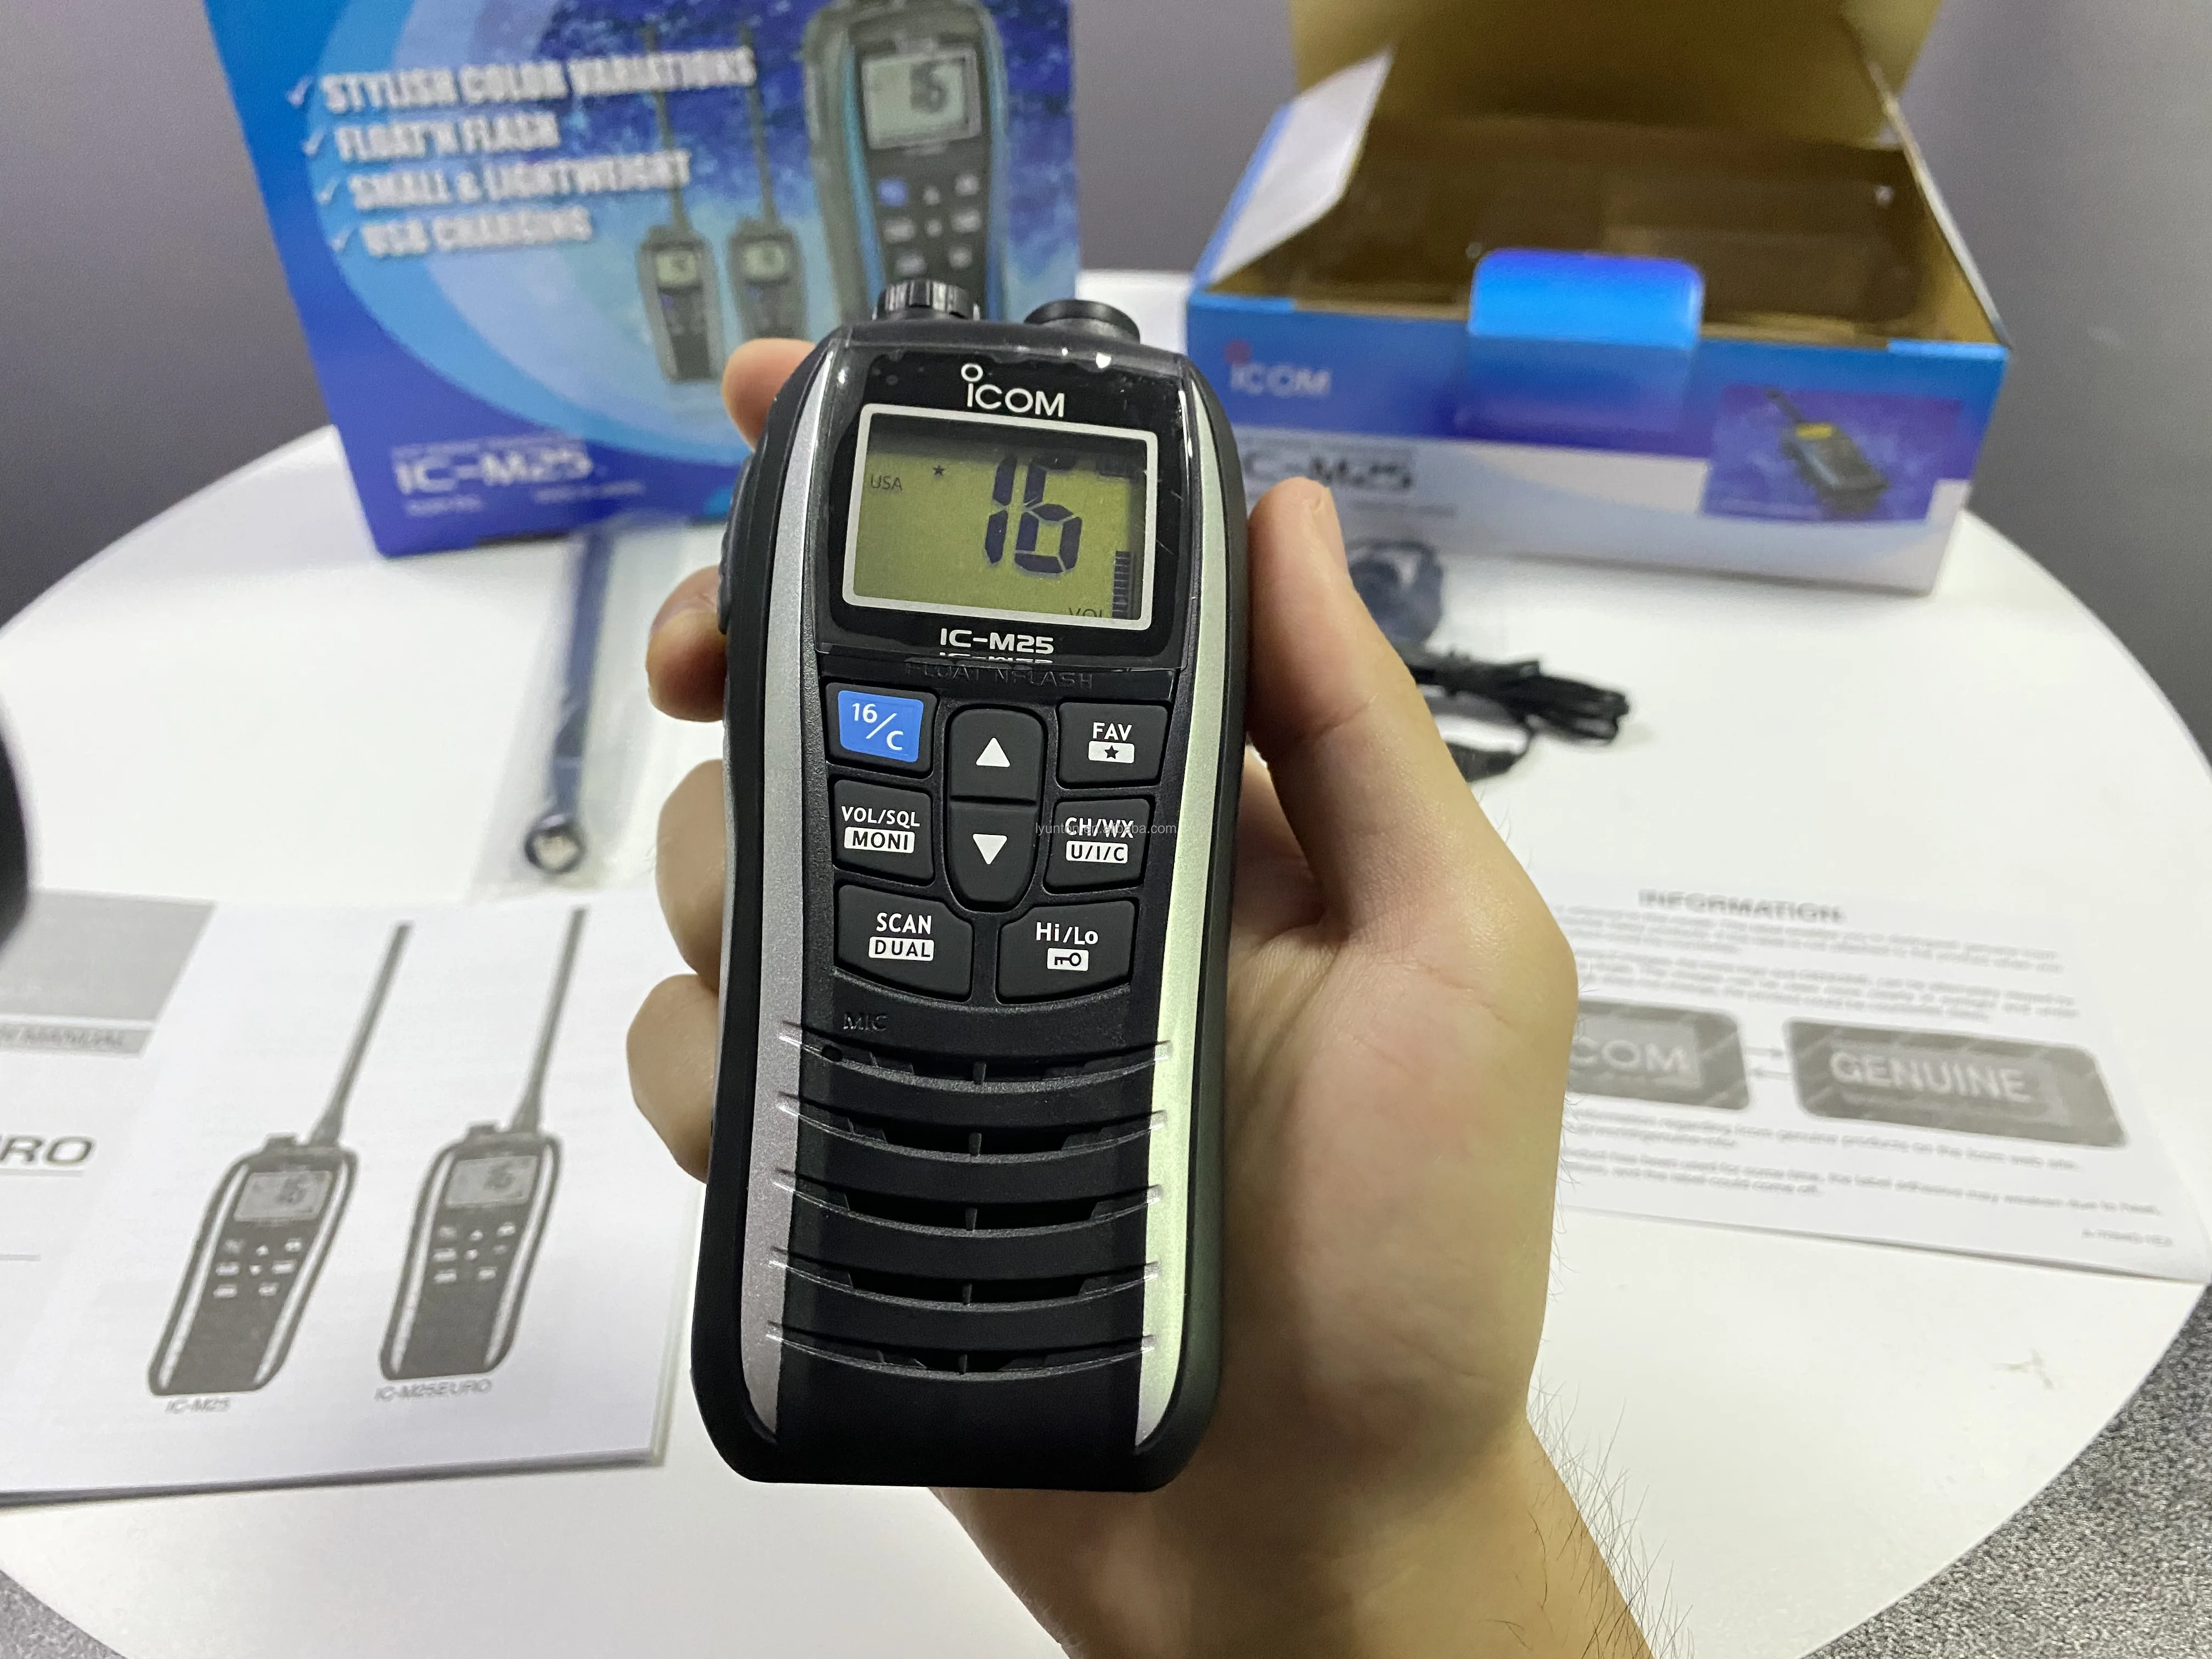 ICOM VHF MARINE TRANSCEIVER IC-M25 USB Charing IPX7 waterproof walkie taklie